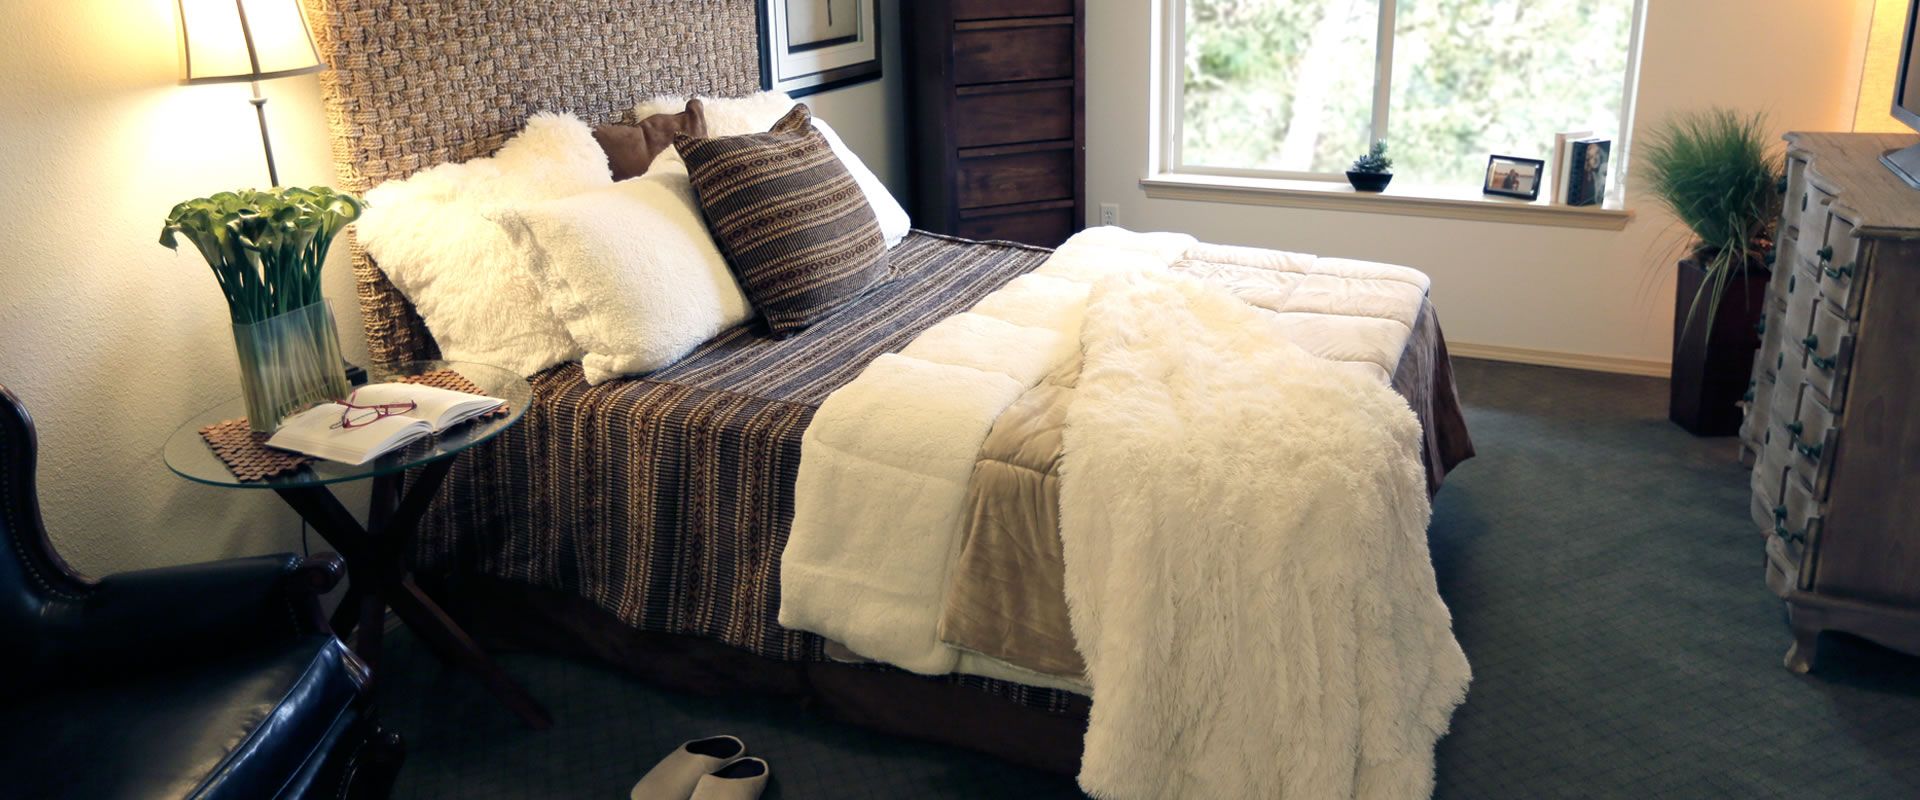 Senior living bedroom interior at Highgate, Prescott Lakes with elegant furniture and decor.